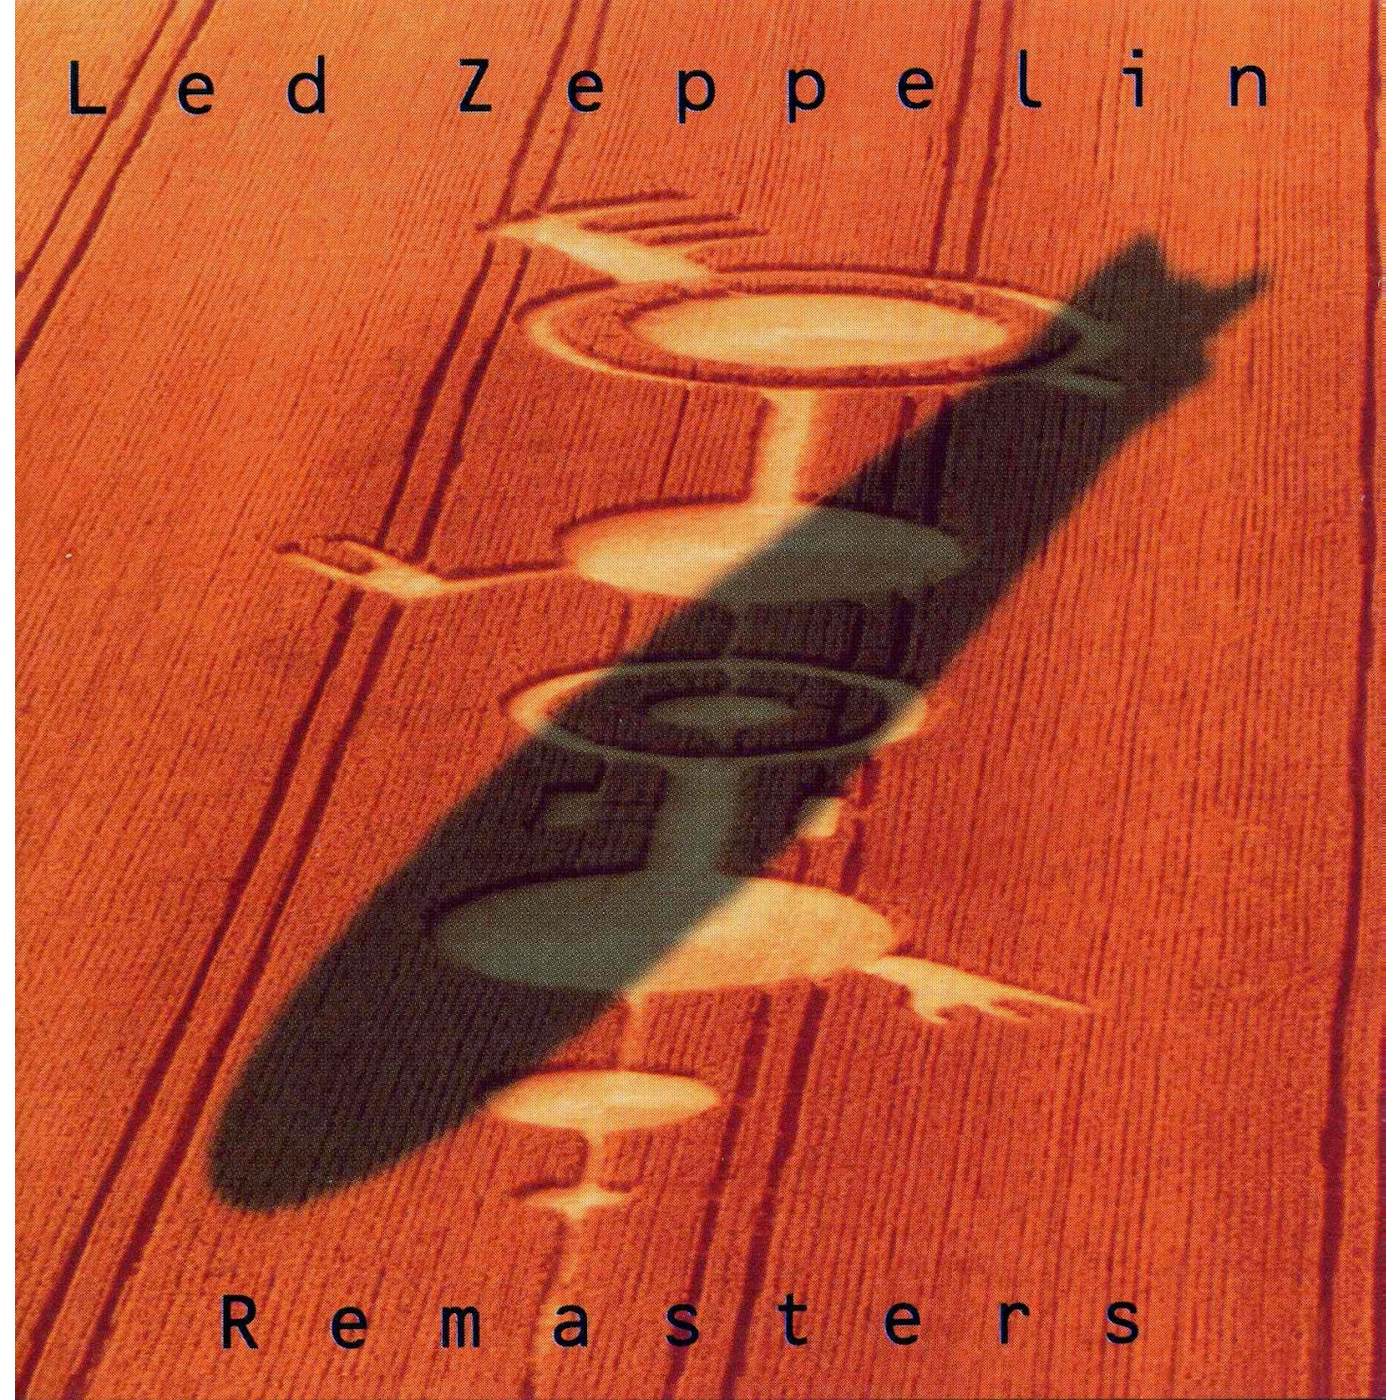 Led Zeppelin - Remasteres